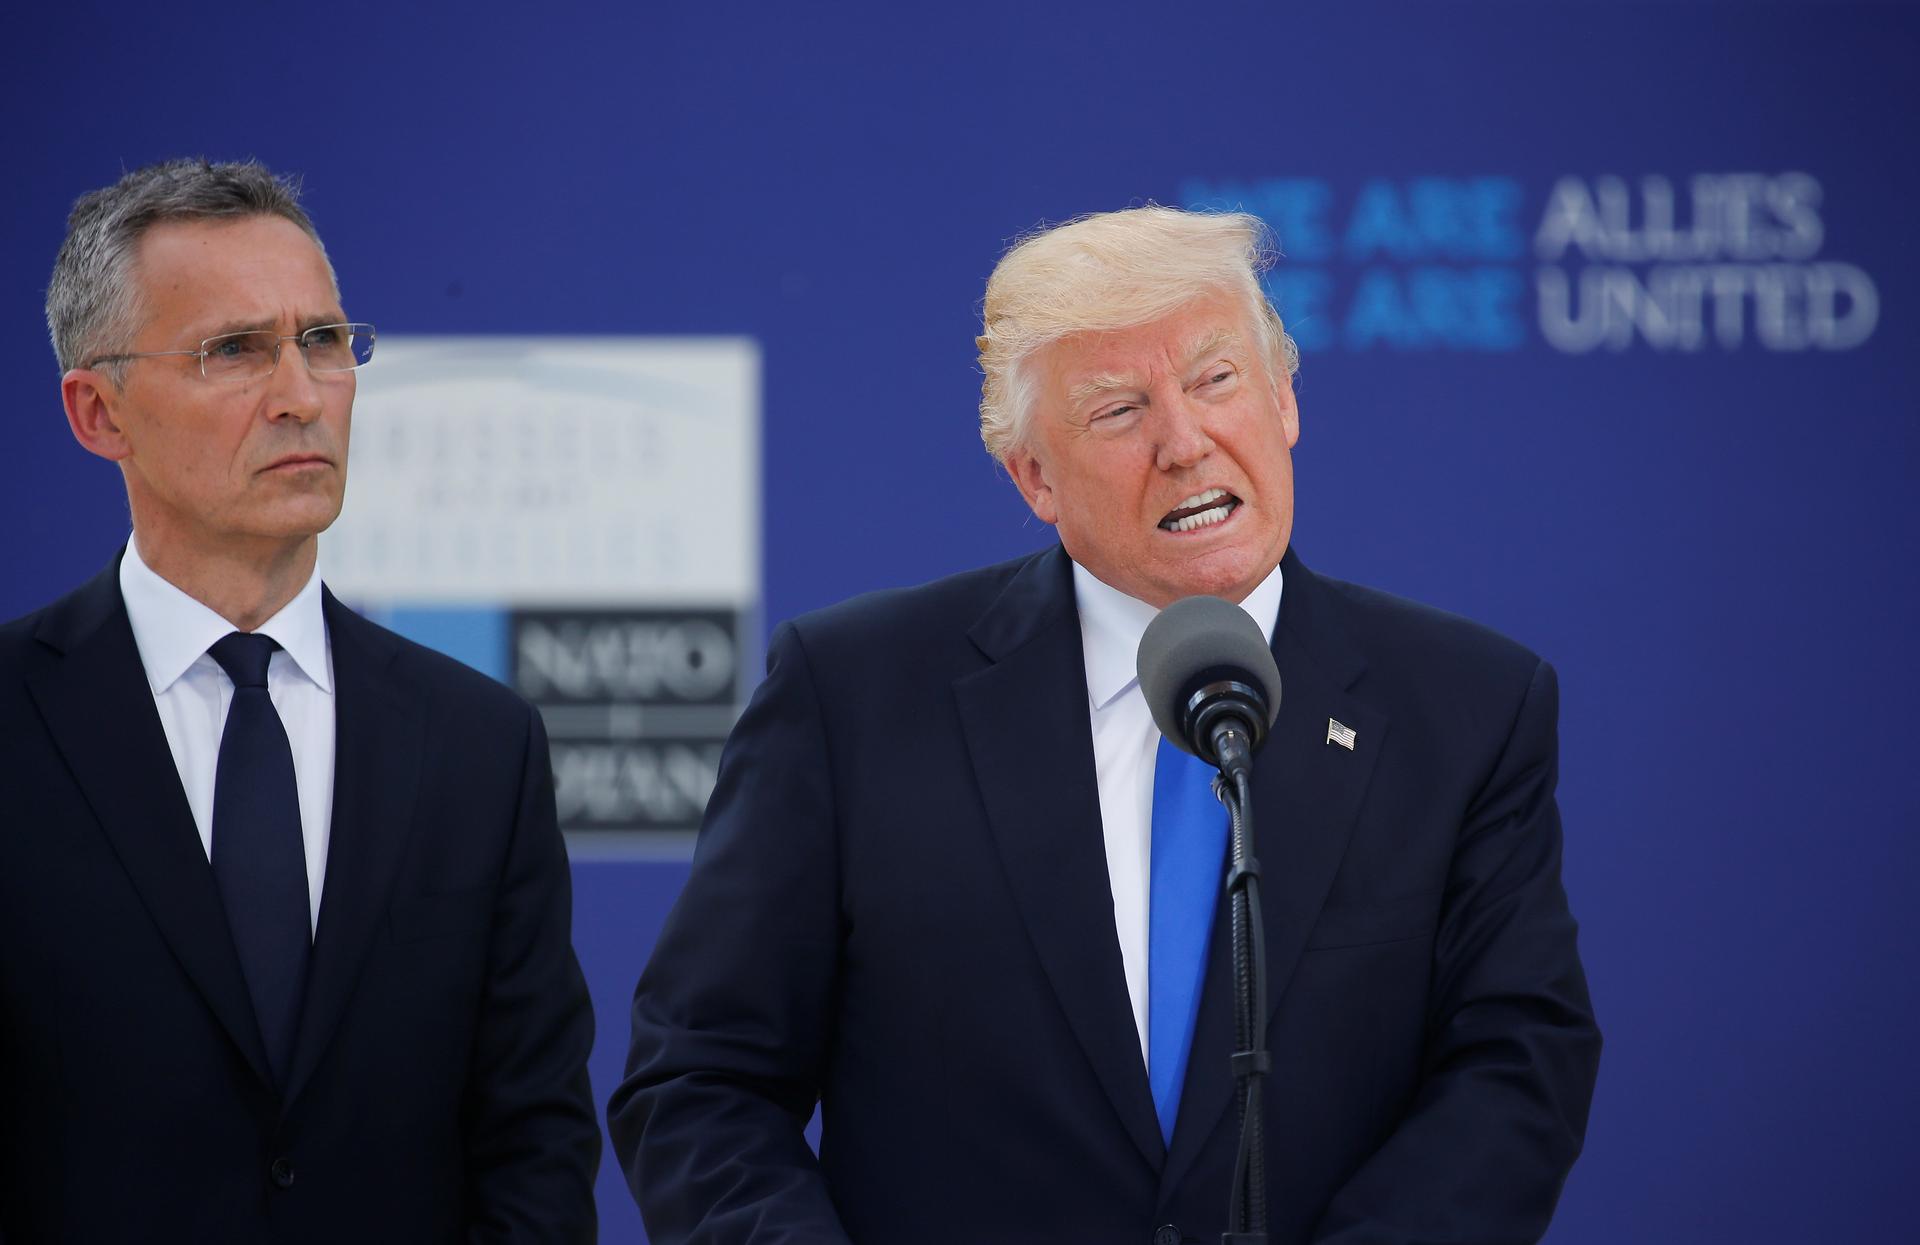 President Donald Trump speaks beside NATO Secretary General Jens Stoltenberg at the start of the NATO summit.